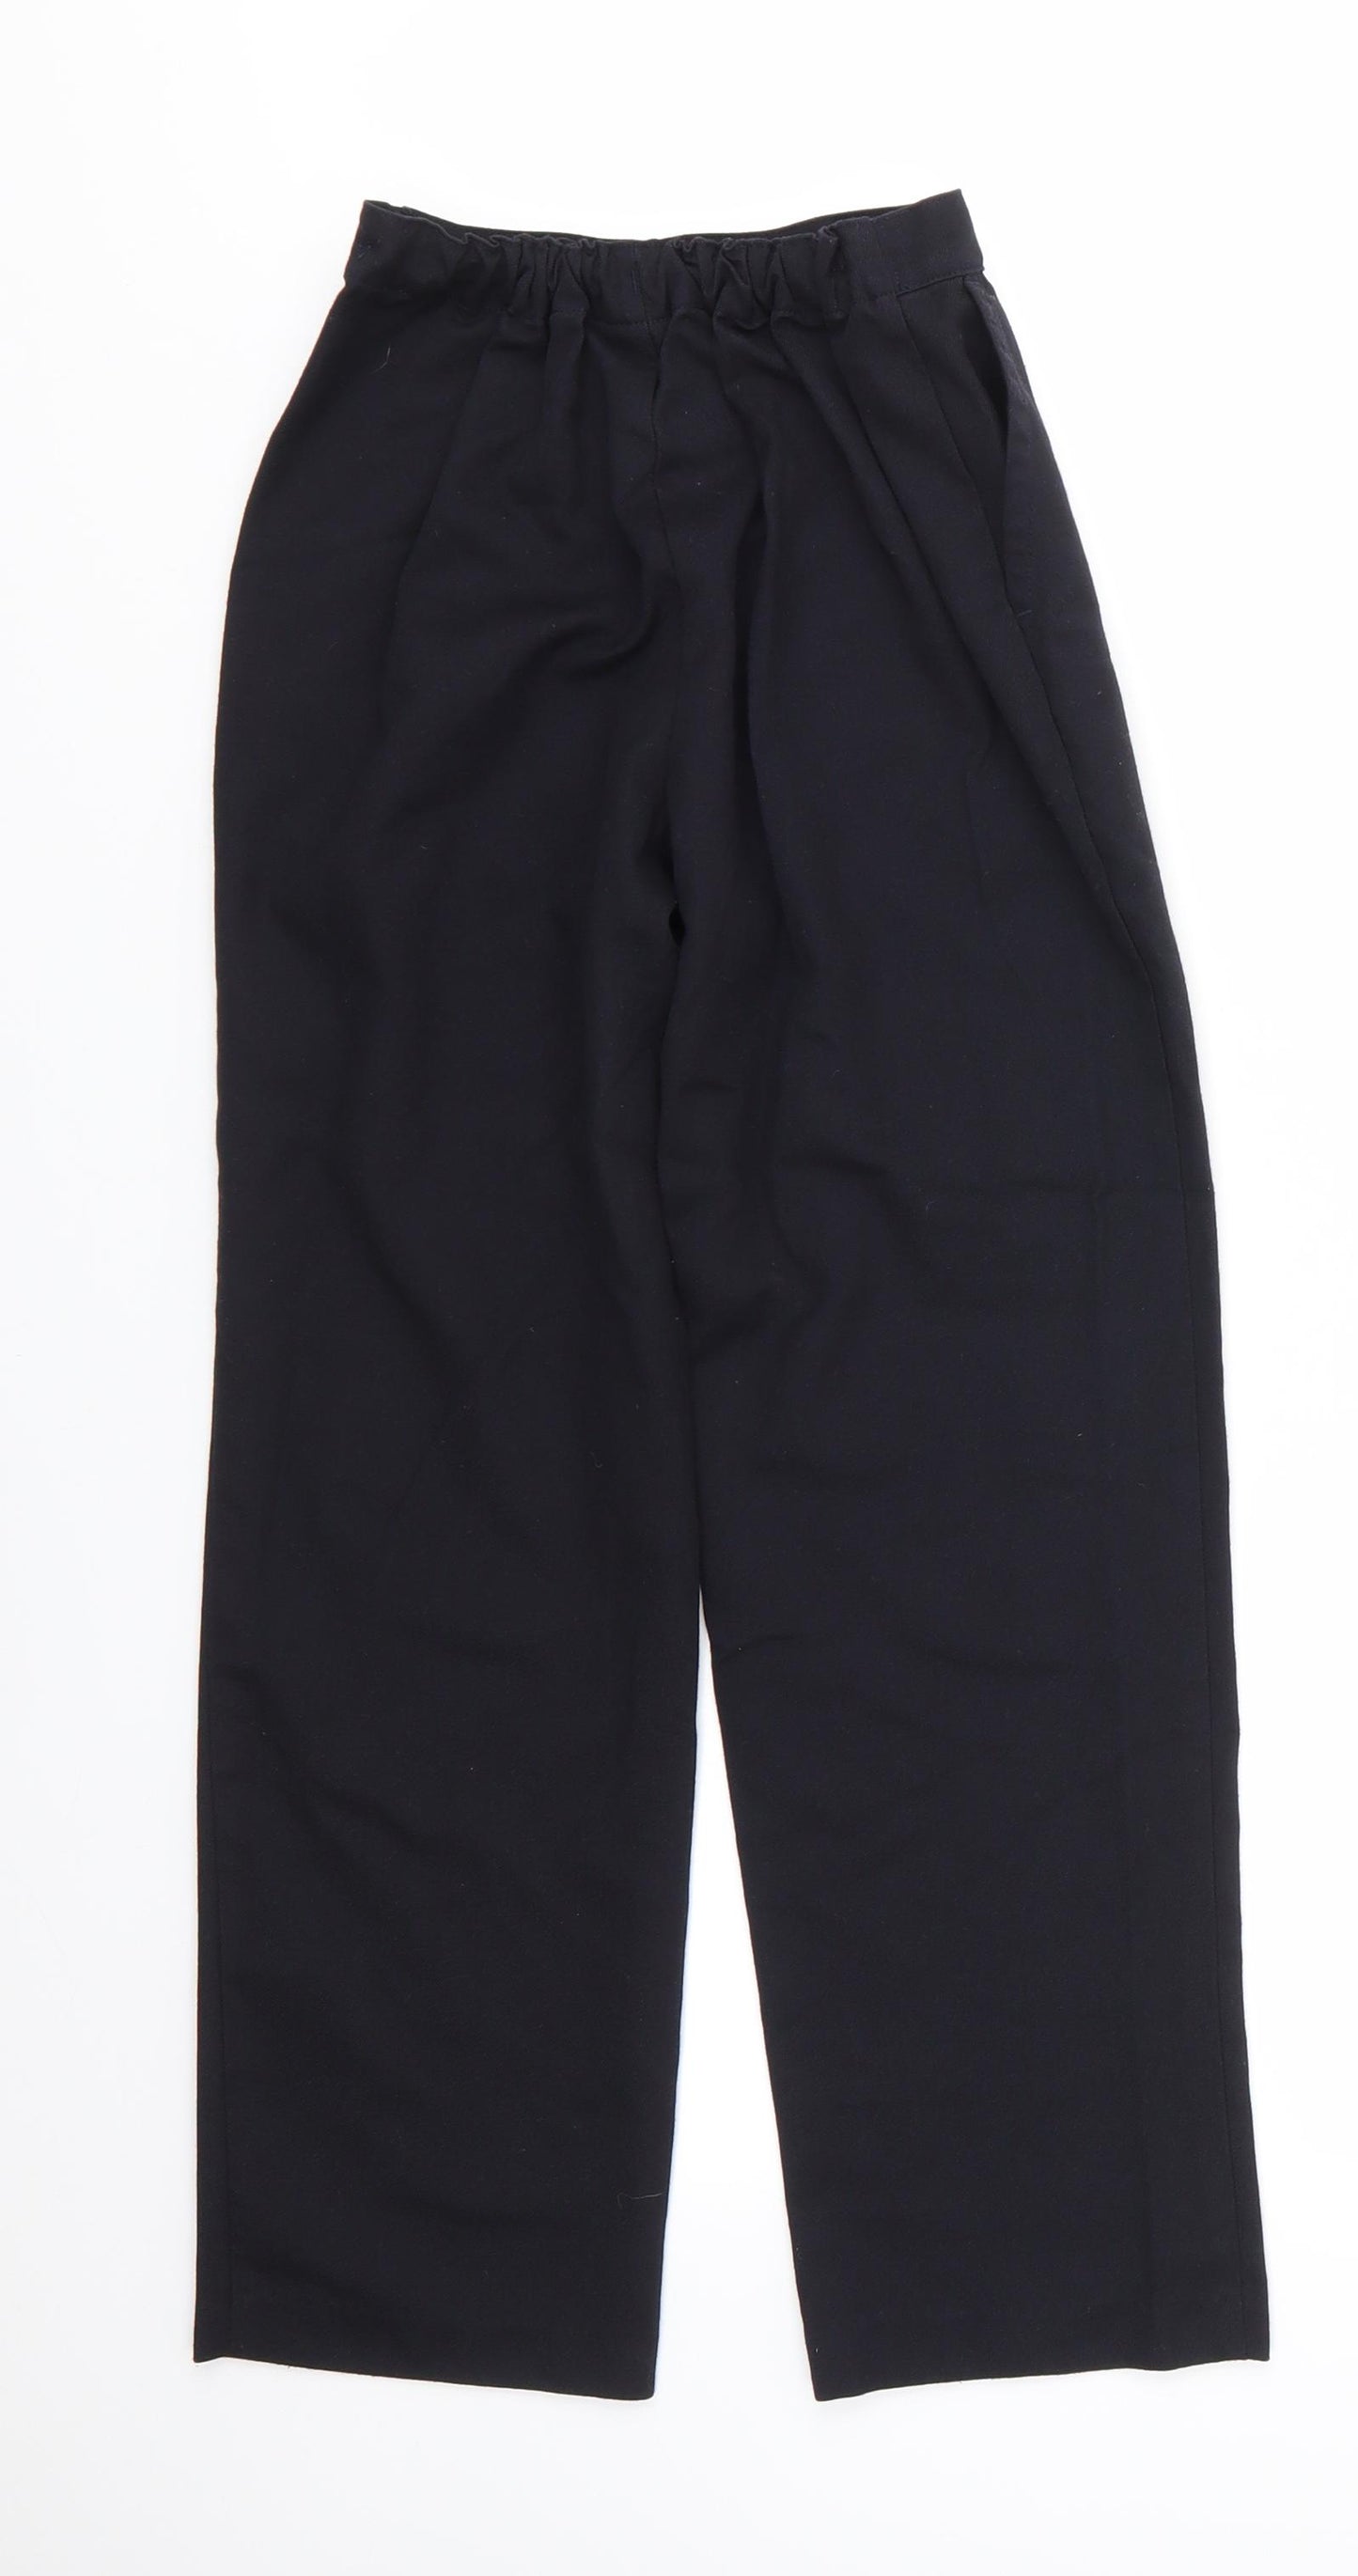 Matalan Boys Black  Polyester Dress Pants Trousers Size 10 Years  Regular  - School Trousers Back Elastication